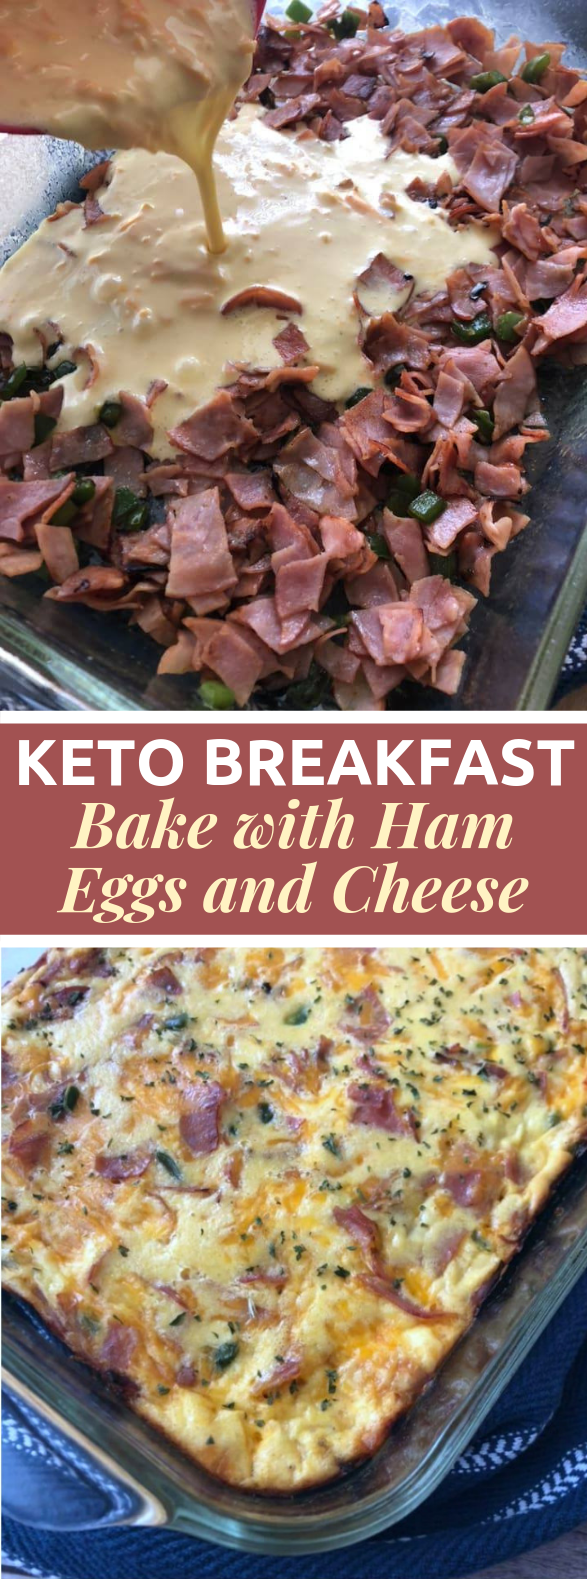 KETO BREAKFAST BAKE WITH HAM, EGGS AND CHEESE RECIPE #ketodiet #ketogenic